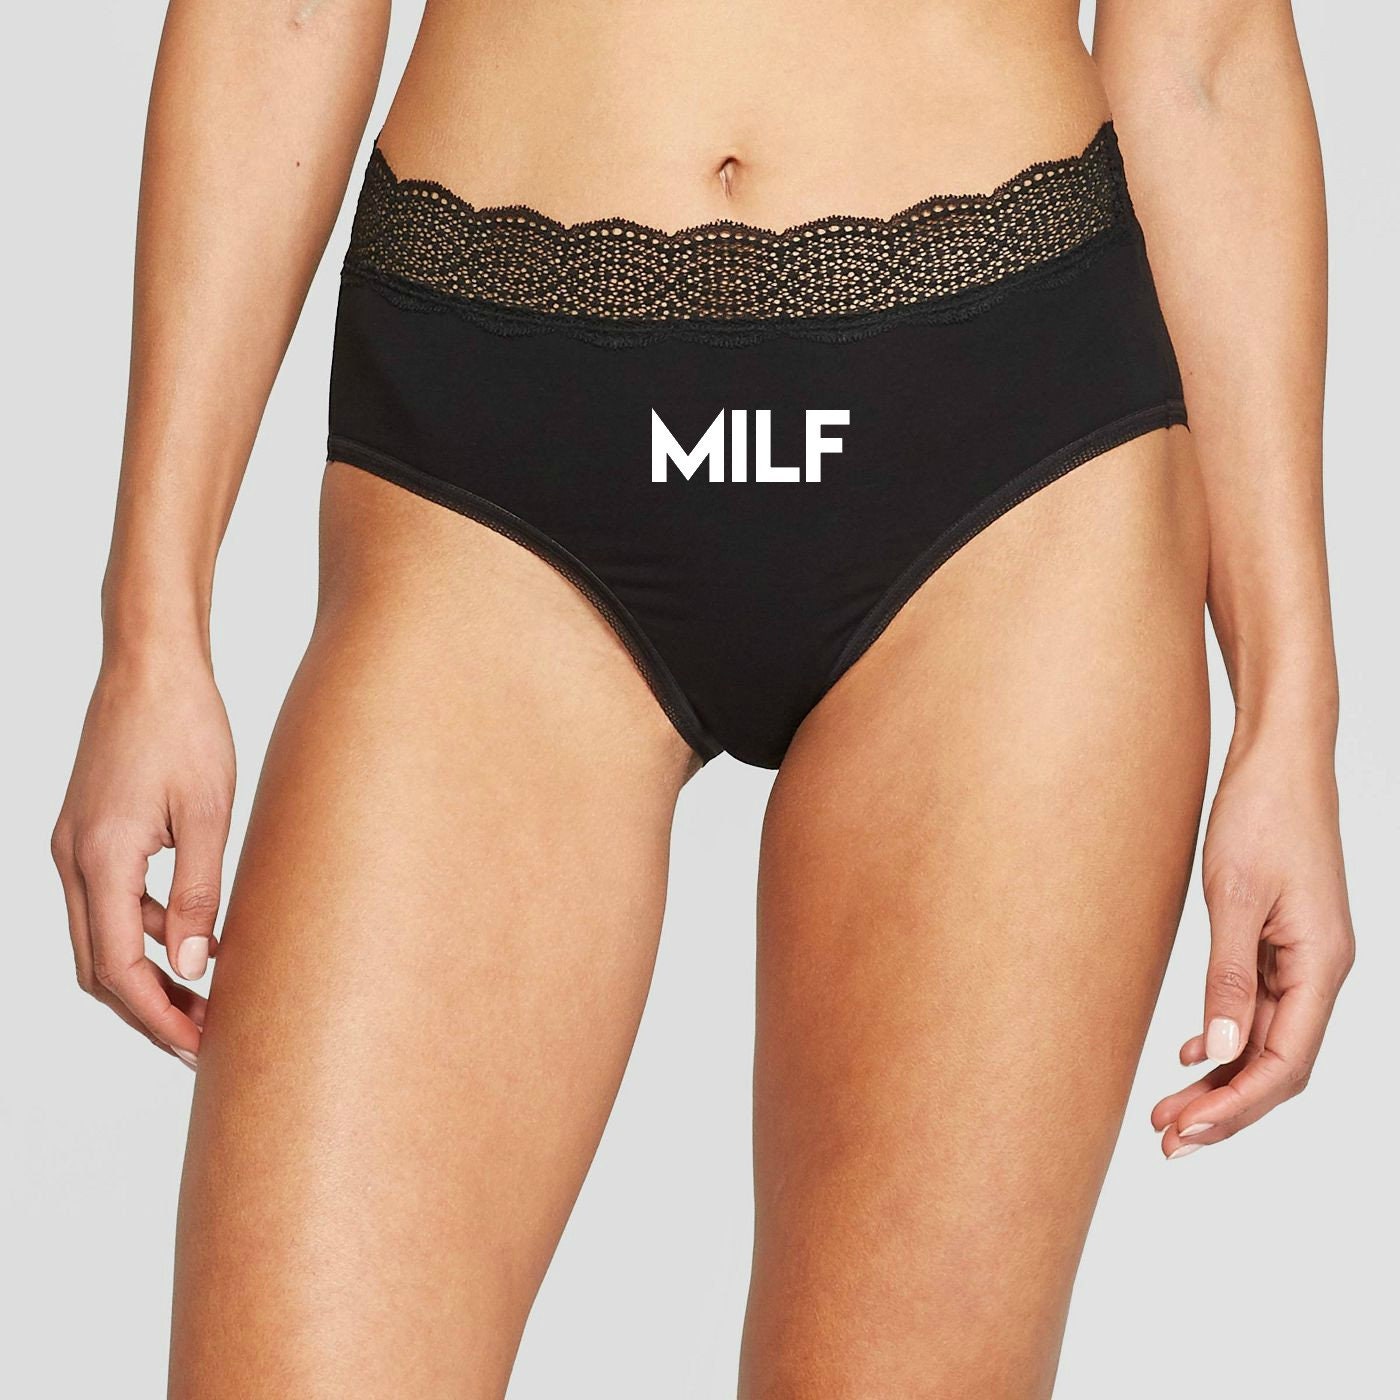 MILF Panties, Mom I'd Like to Fuck, New Mom Gift, Gift for Mom